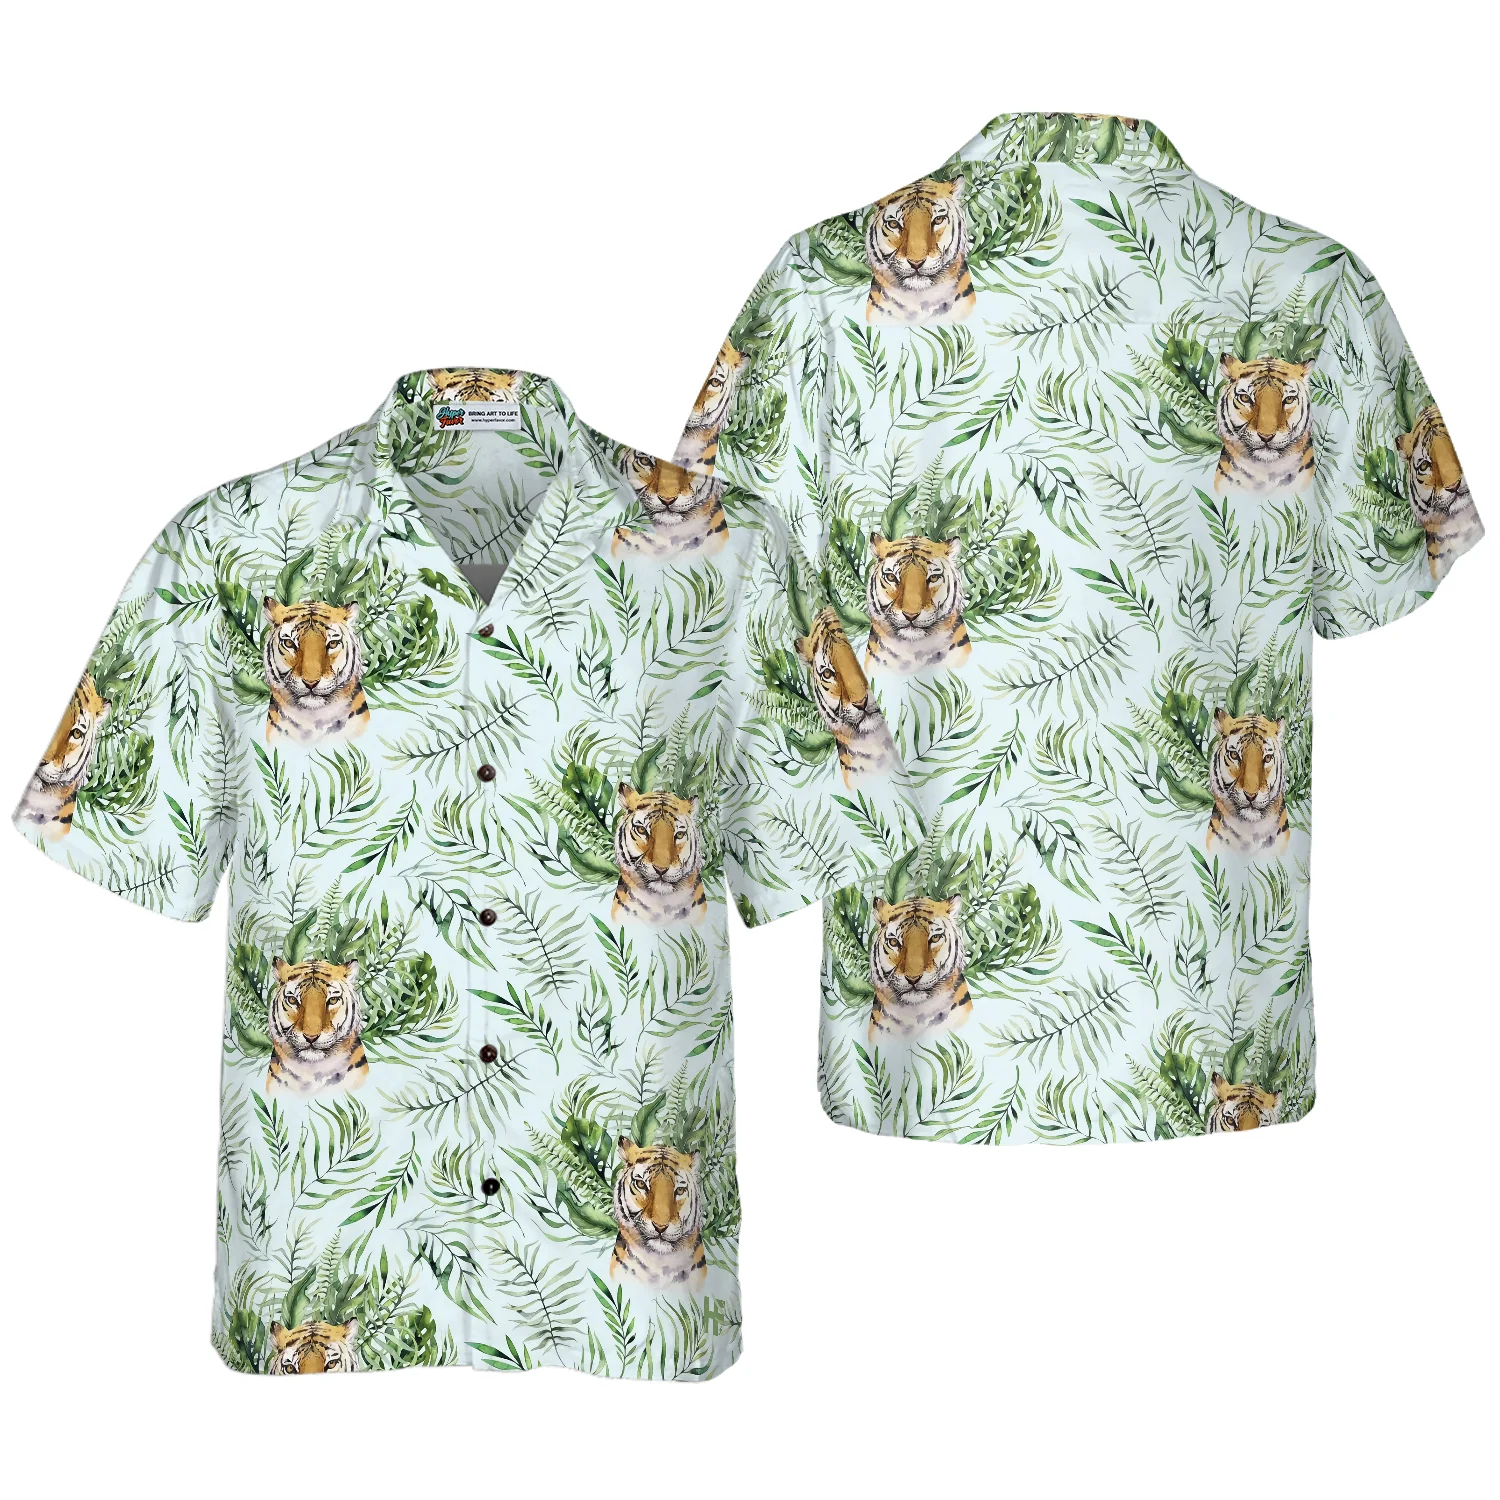 Tropical Green Leaves And Jungle Tiger Shirt Hawaiian Shirt Aloha Shirt For Men and Women